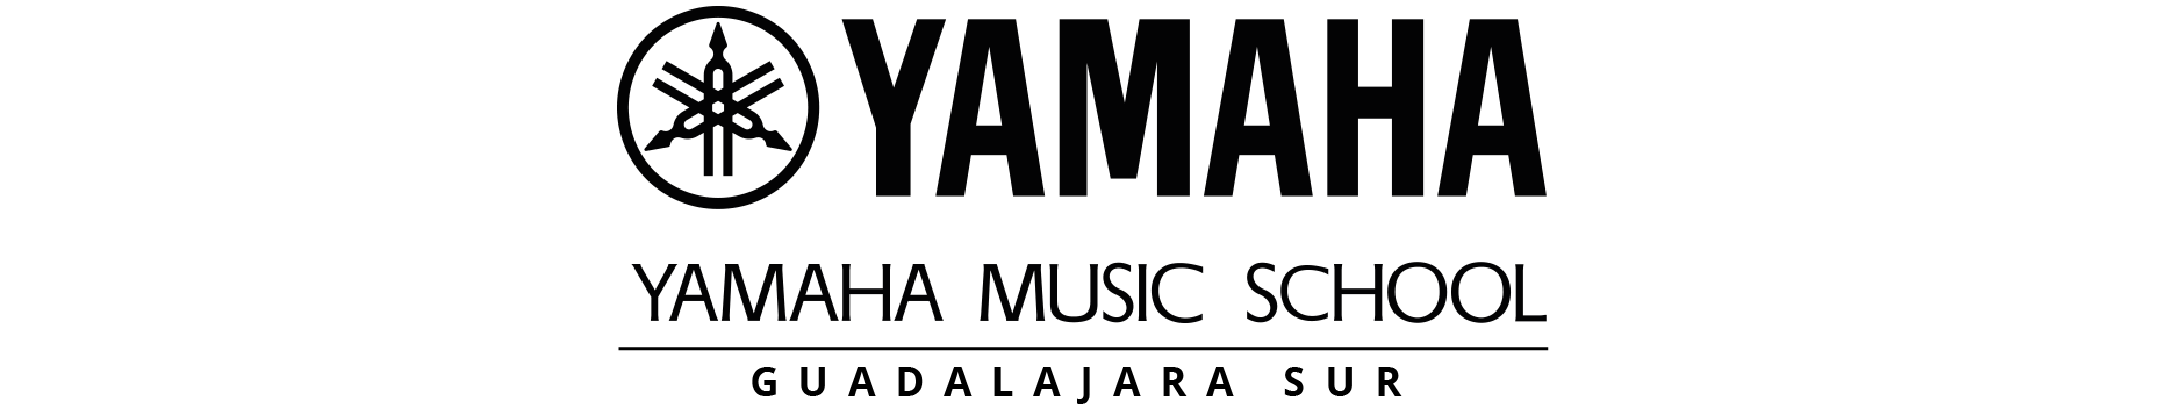 Yamaha Music School Guadalajara Sur